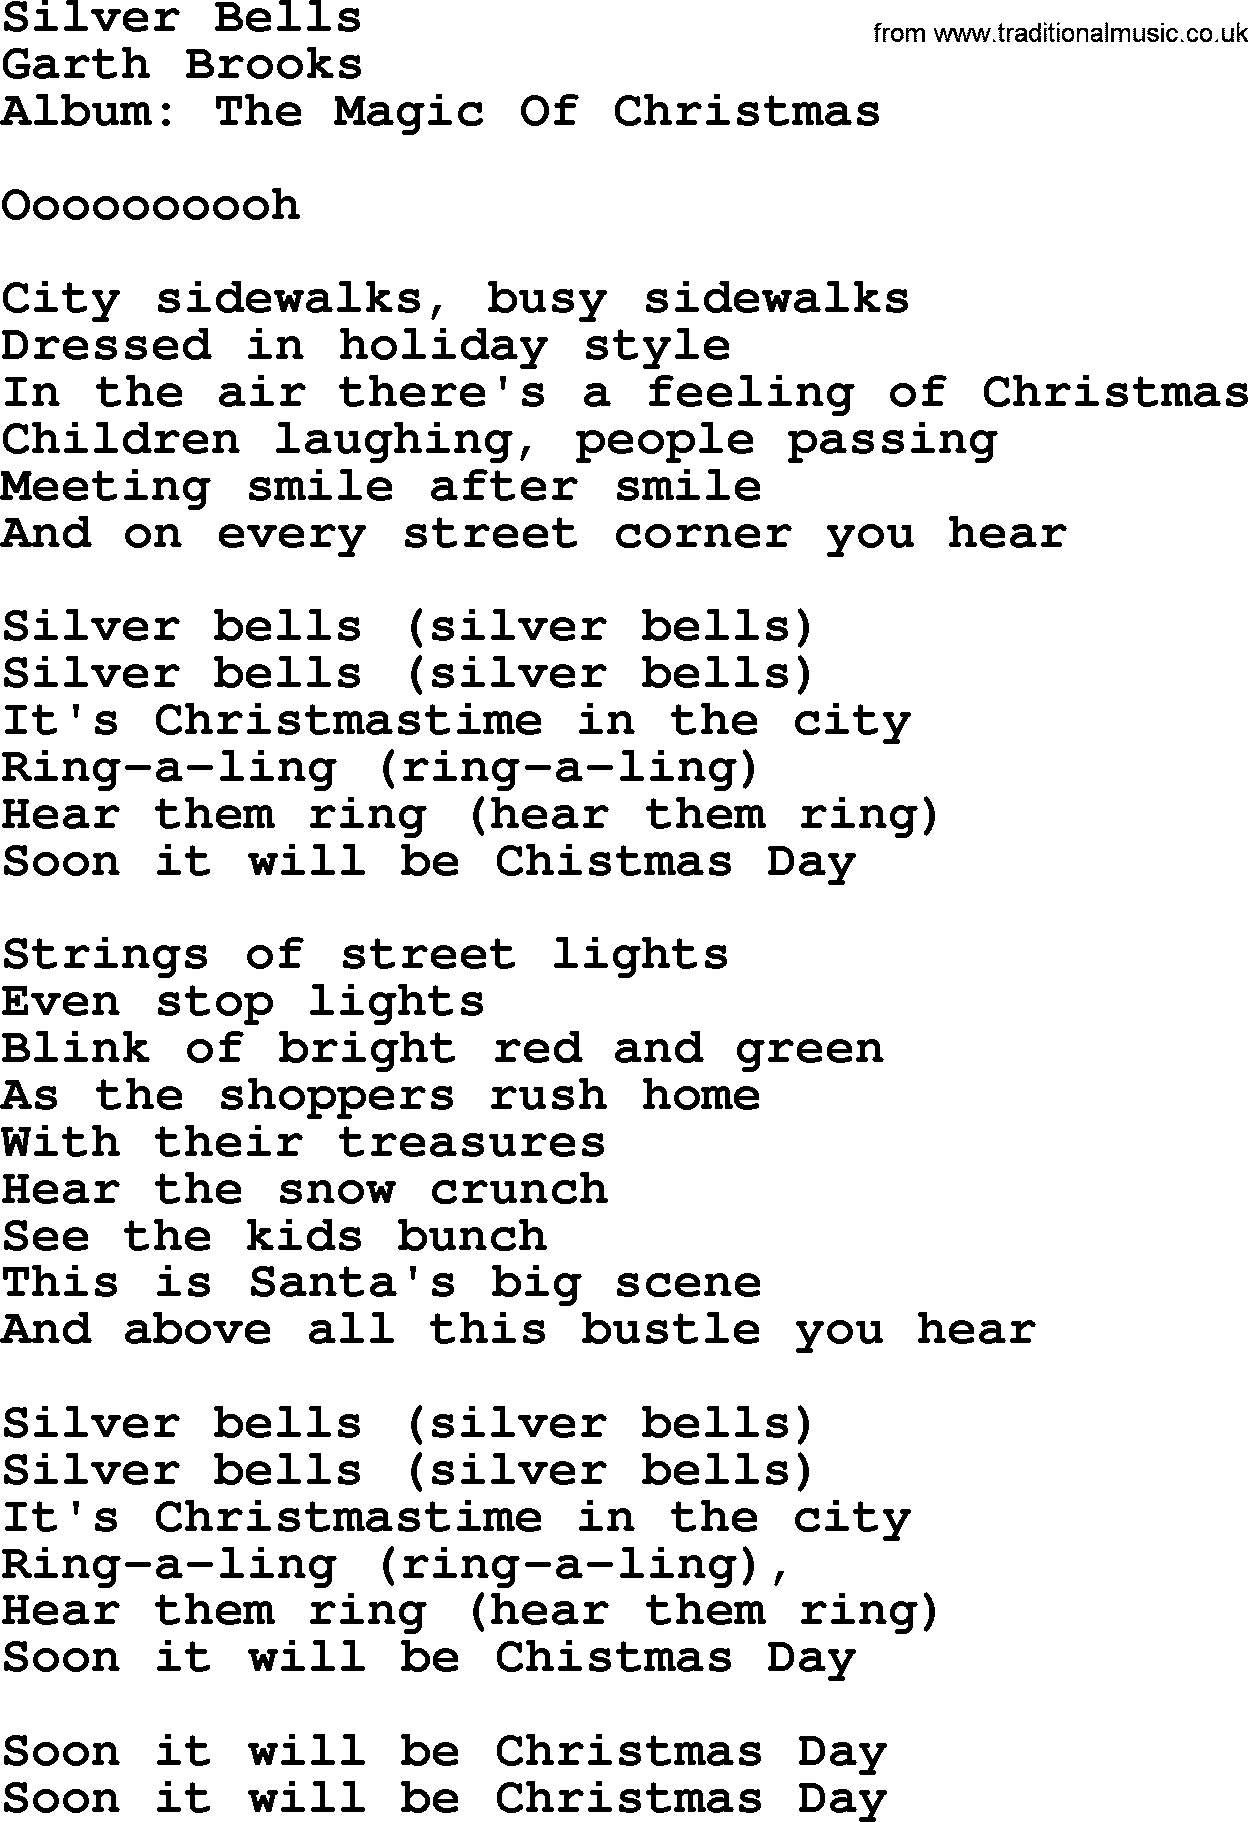 Garth Brooks song: Silver Bells, lyrics